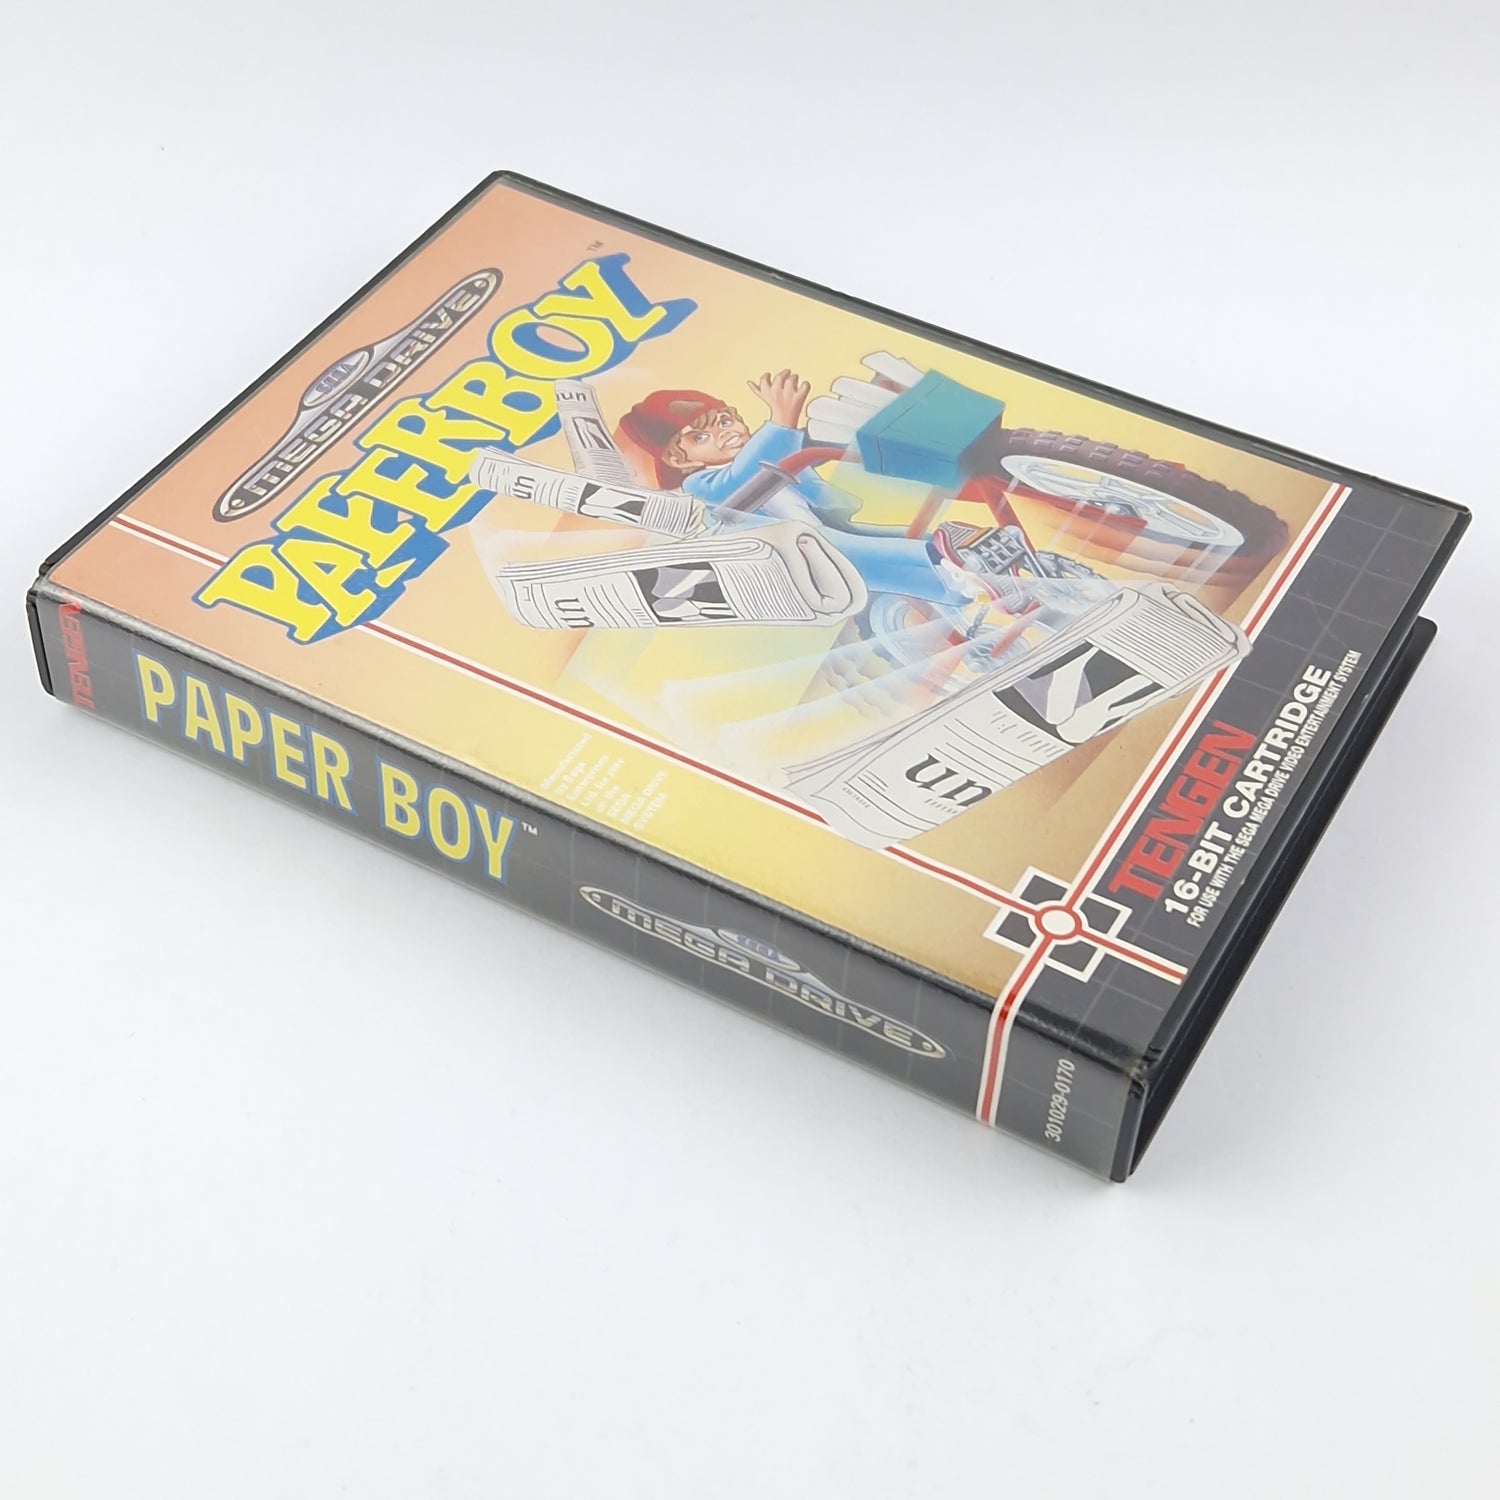 Sega Mega Drive Game: Paperboy - Module Instructions OVP cib / MD PAL GAME TENGEN